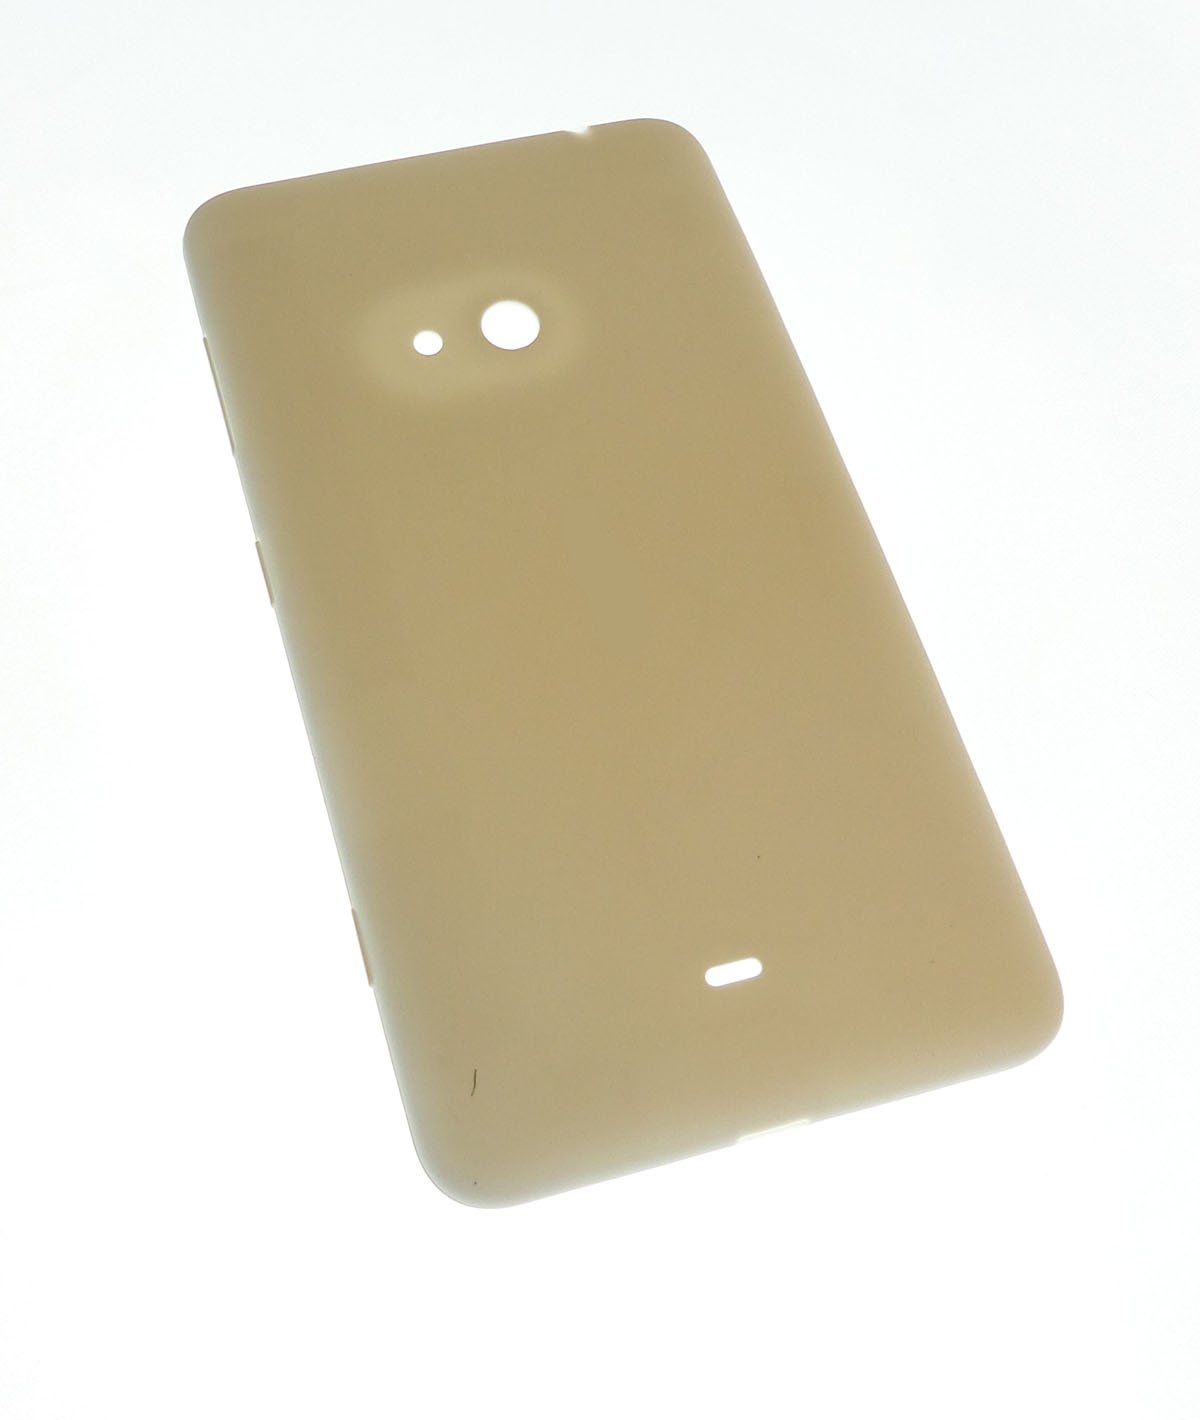 White rear battery cover for Nokia Lumia 625